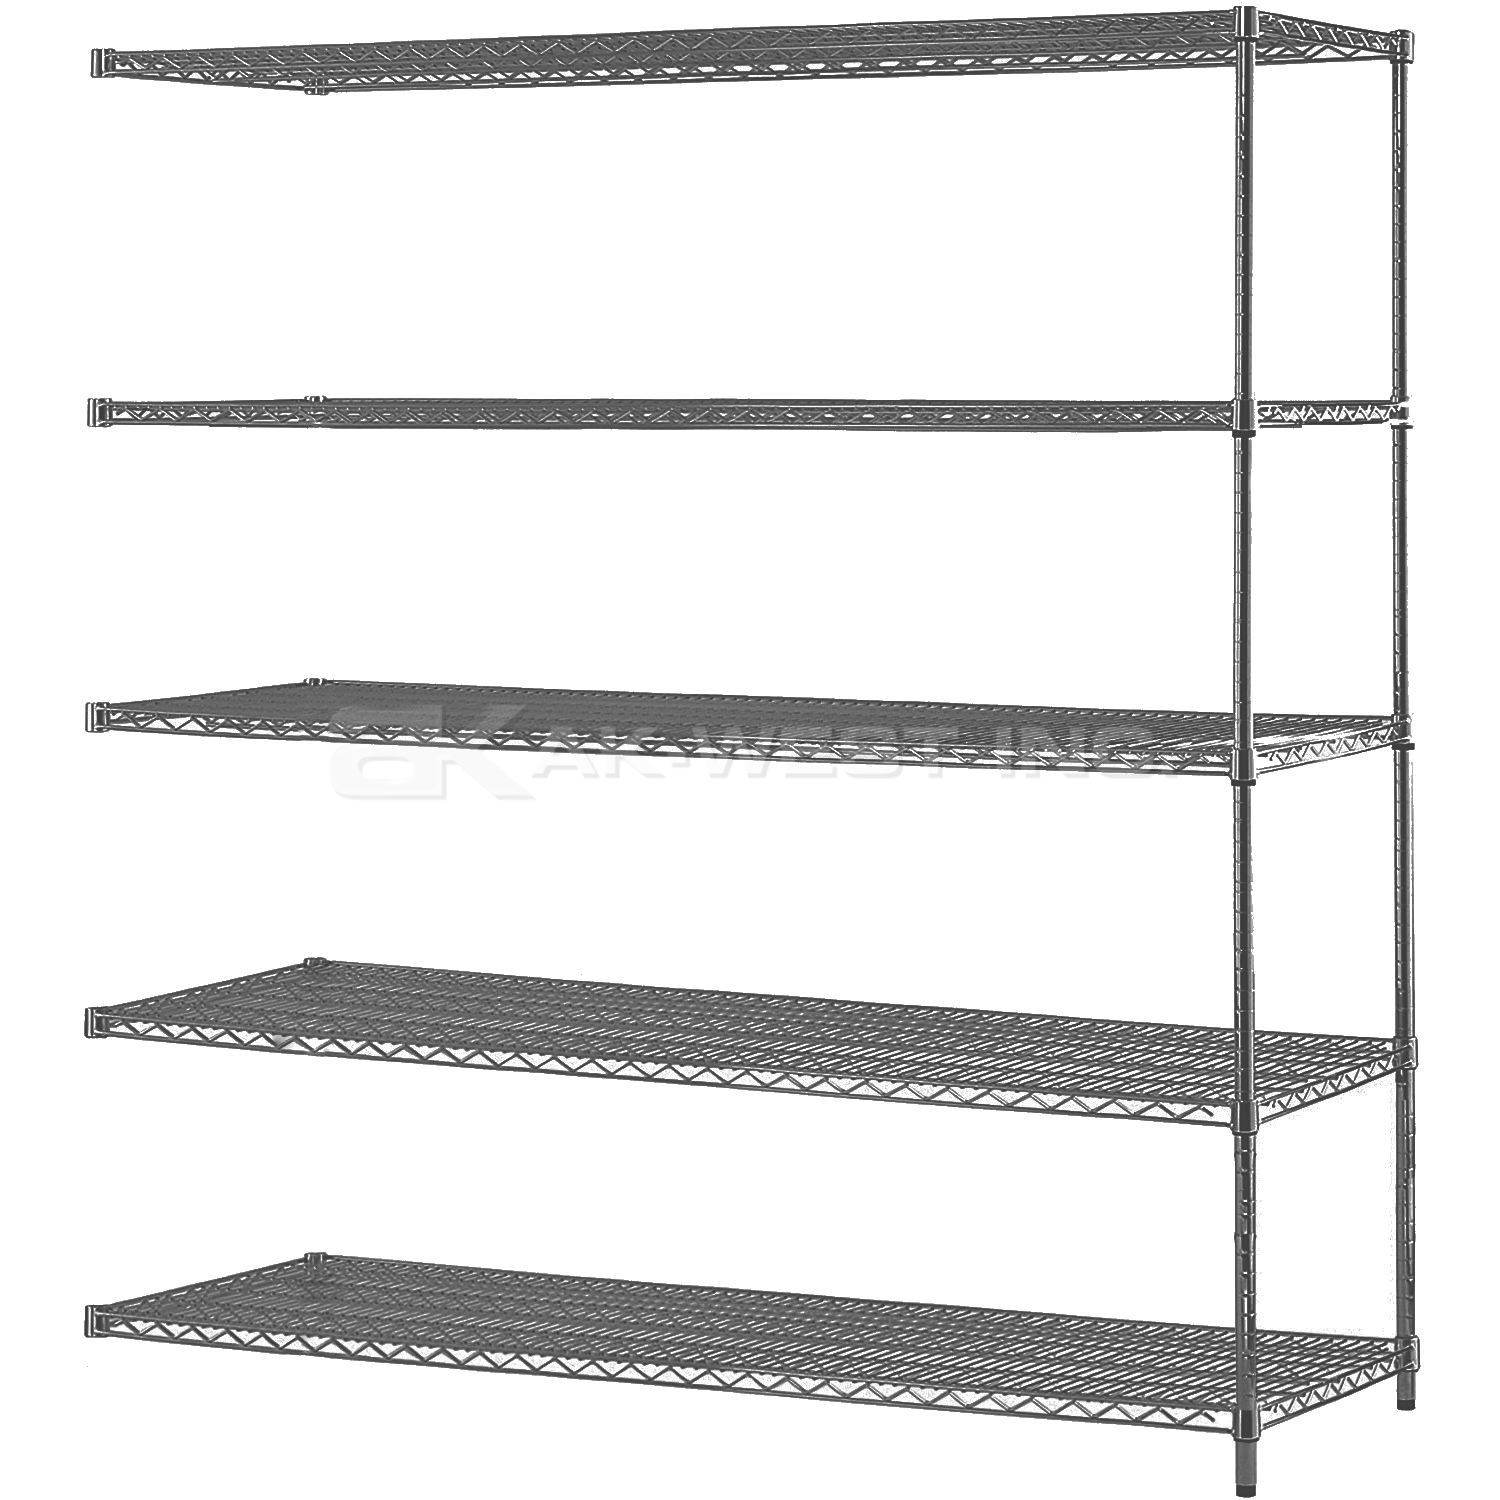 Grey, 24"D x 72"W x 54"H, 6 Shelf, Wire Shelving Adder Kit